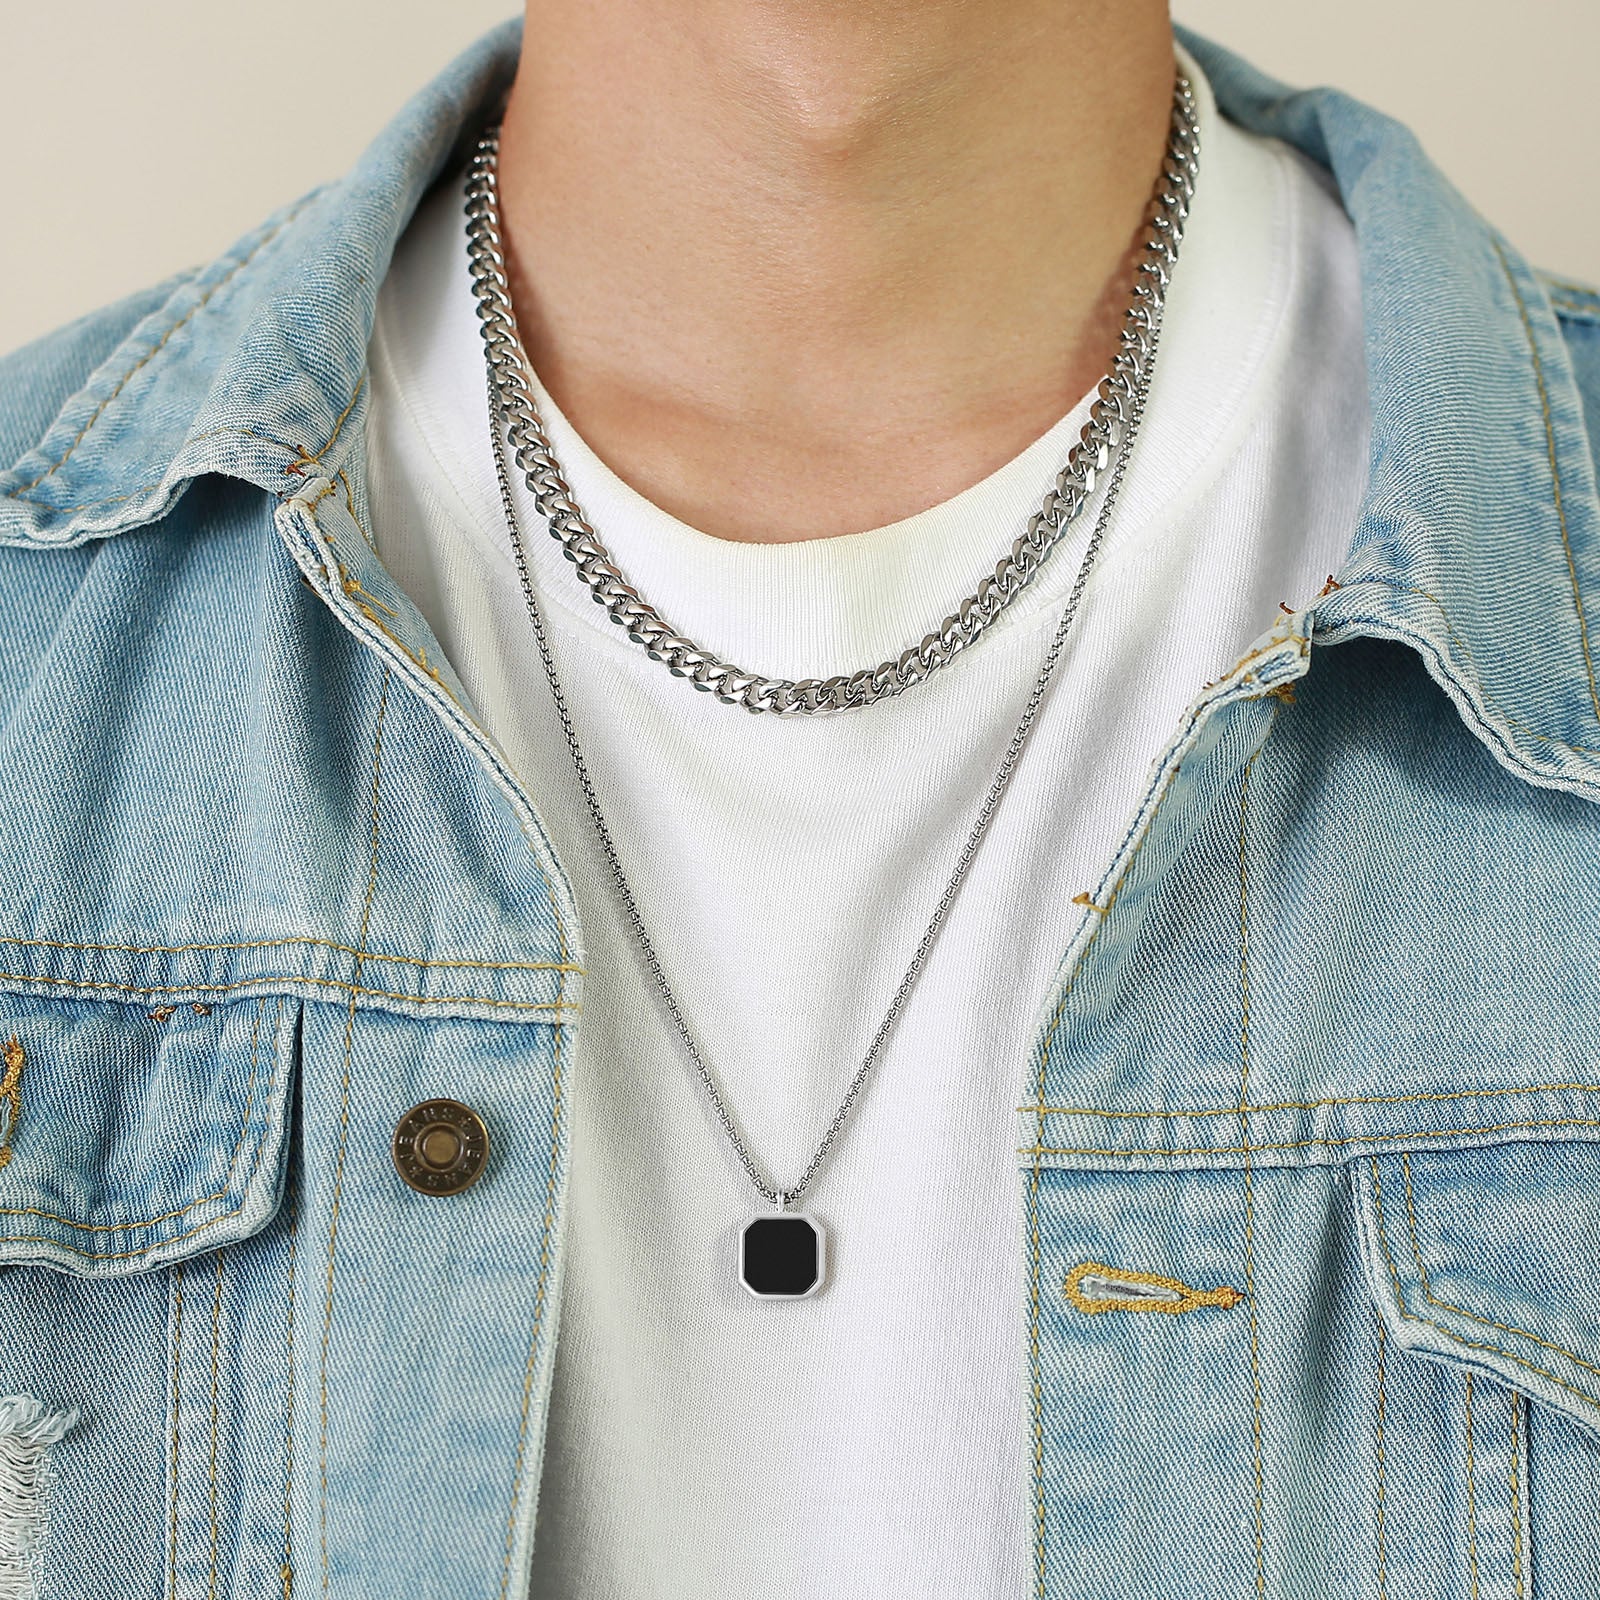 Black Square Pendant Men's Necklace Chain Accessory - Bekro's ART